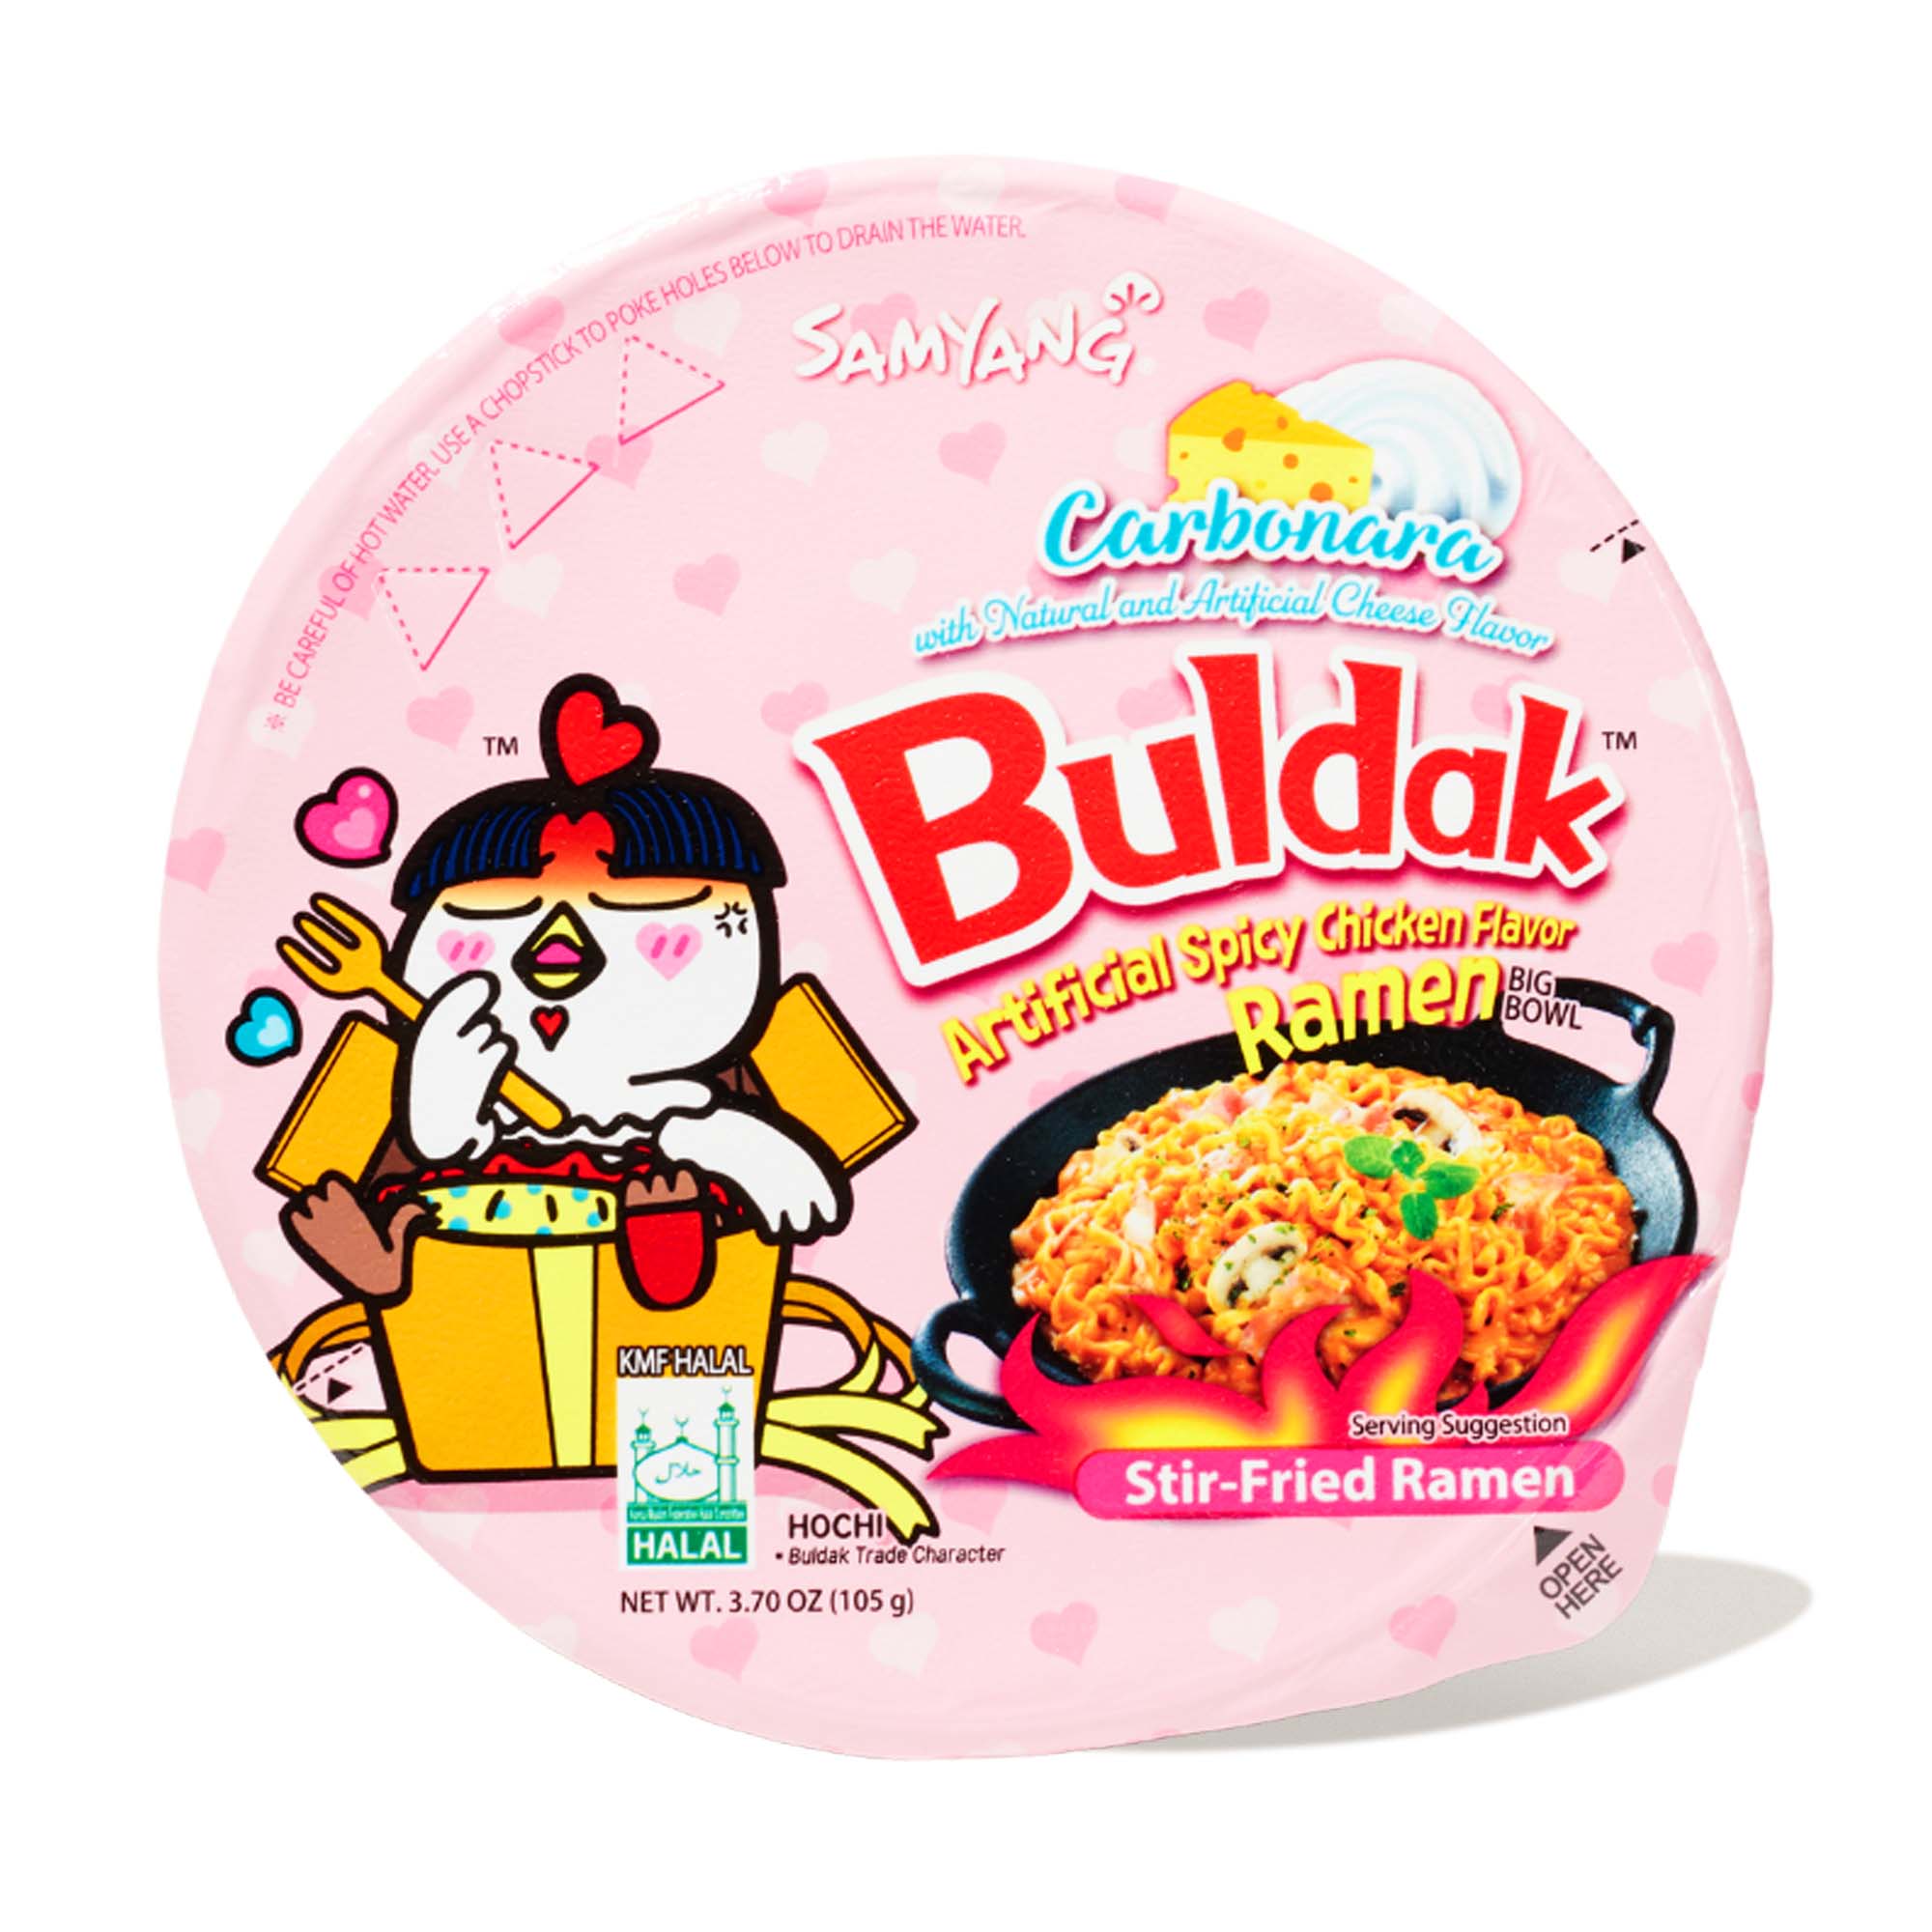 Samyang Buldak Carbo Hot Chicken Ramen Big Bowl